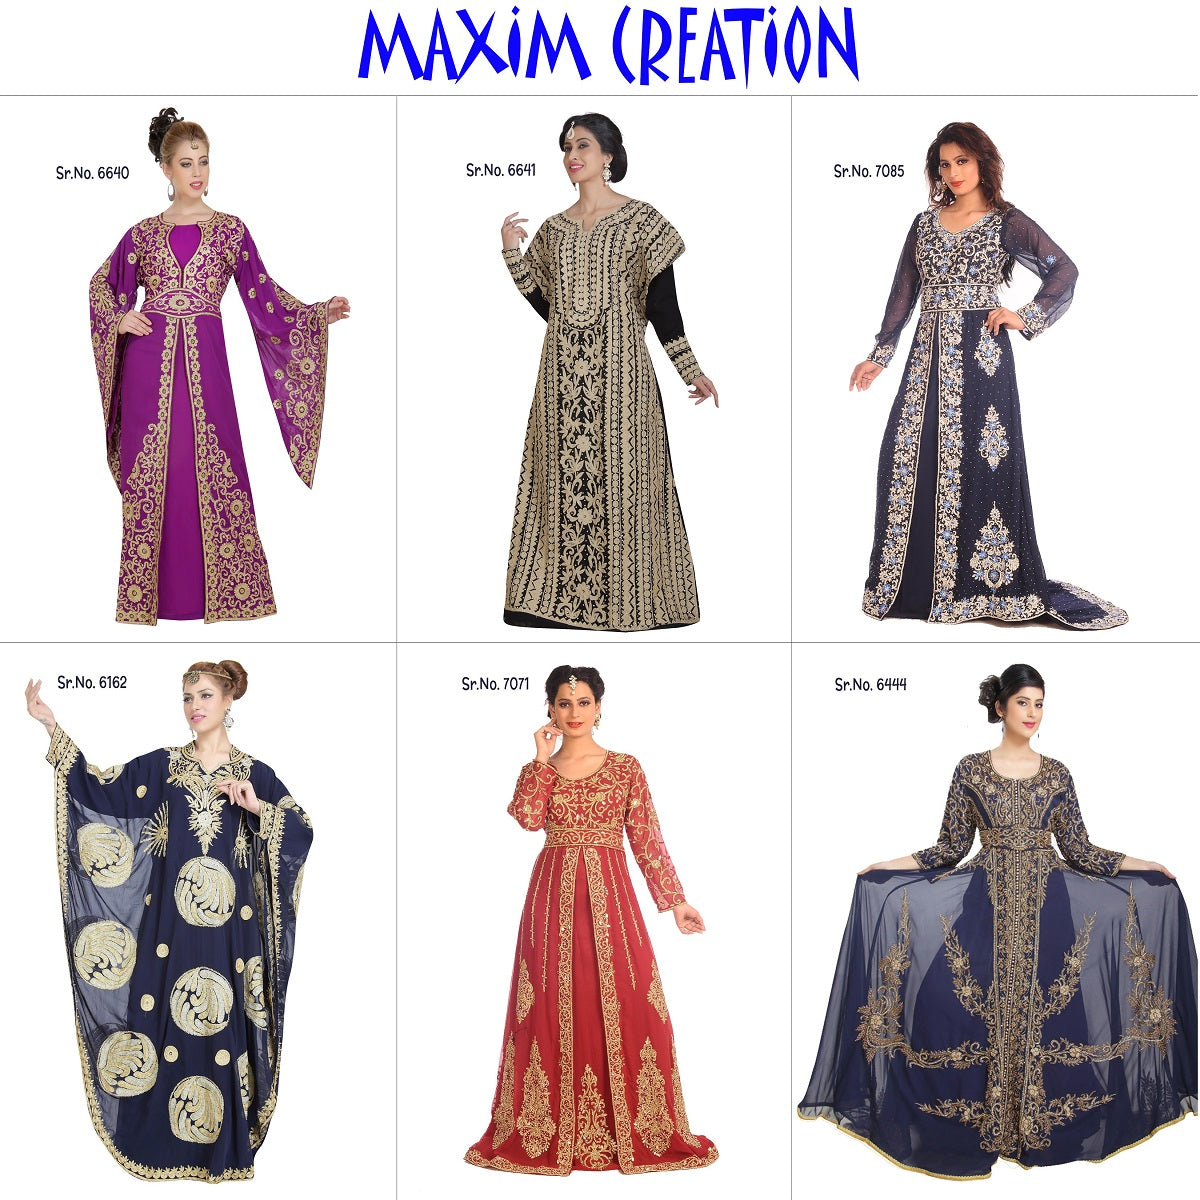 Load image into Gallery viewer, Embroidered Caftan Jallabiya Maxi - Maxim Creation
